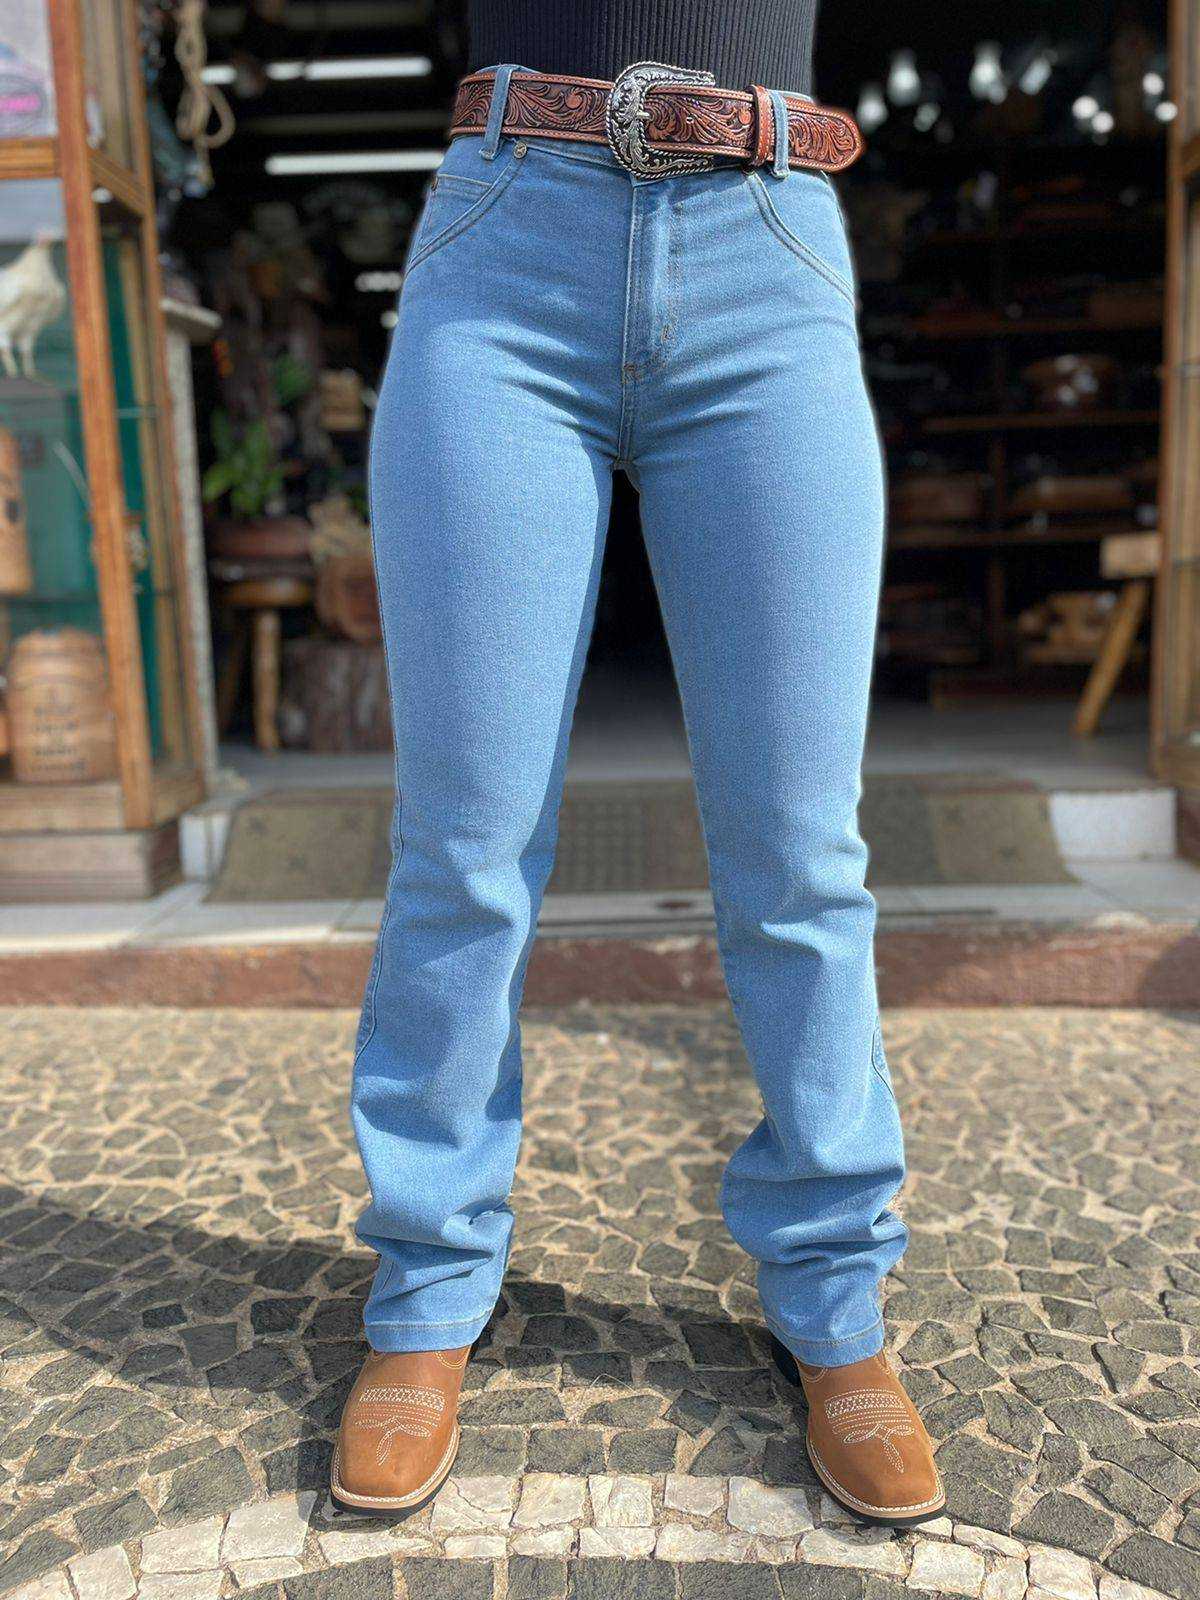 https://50691.cdn.simplo7.net/static/50691/sku/mulheres-calcas-calca-jeans-feminina-rodeio-country-medium-flare-cos-alto-1636641130429.jpeg